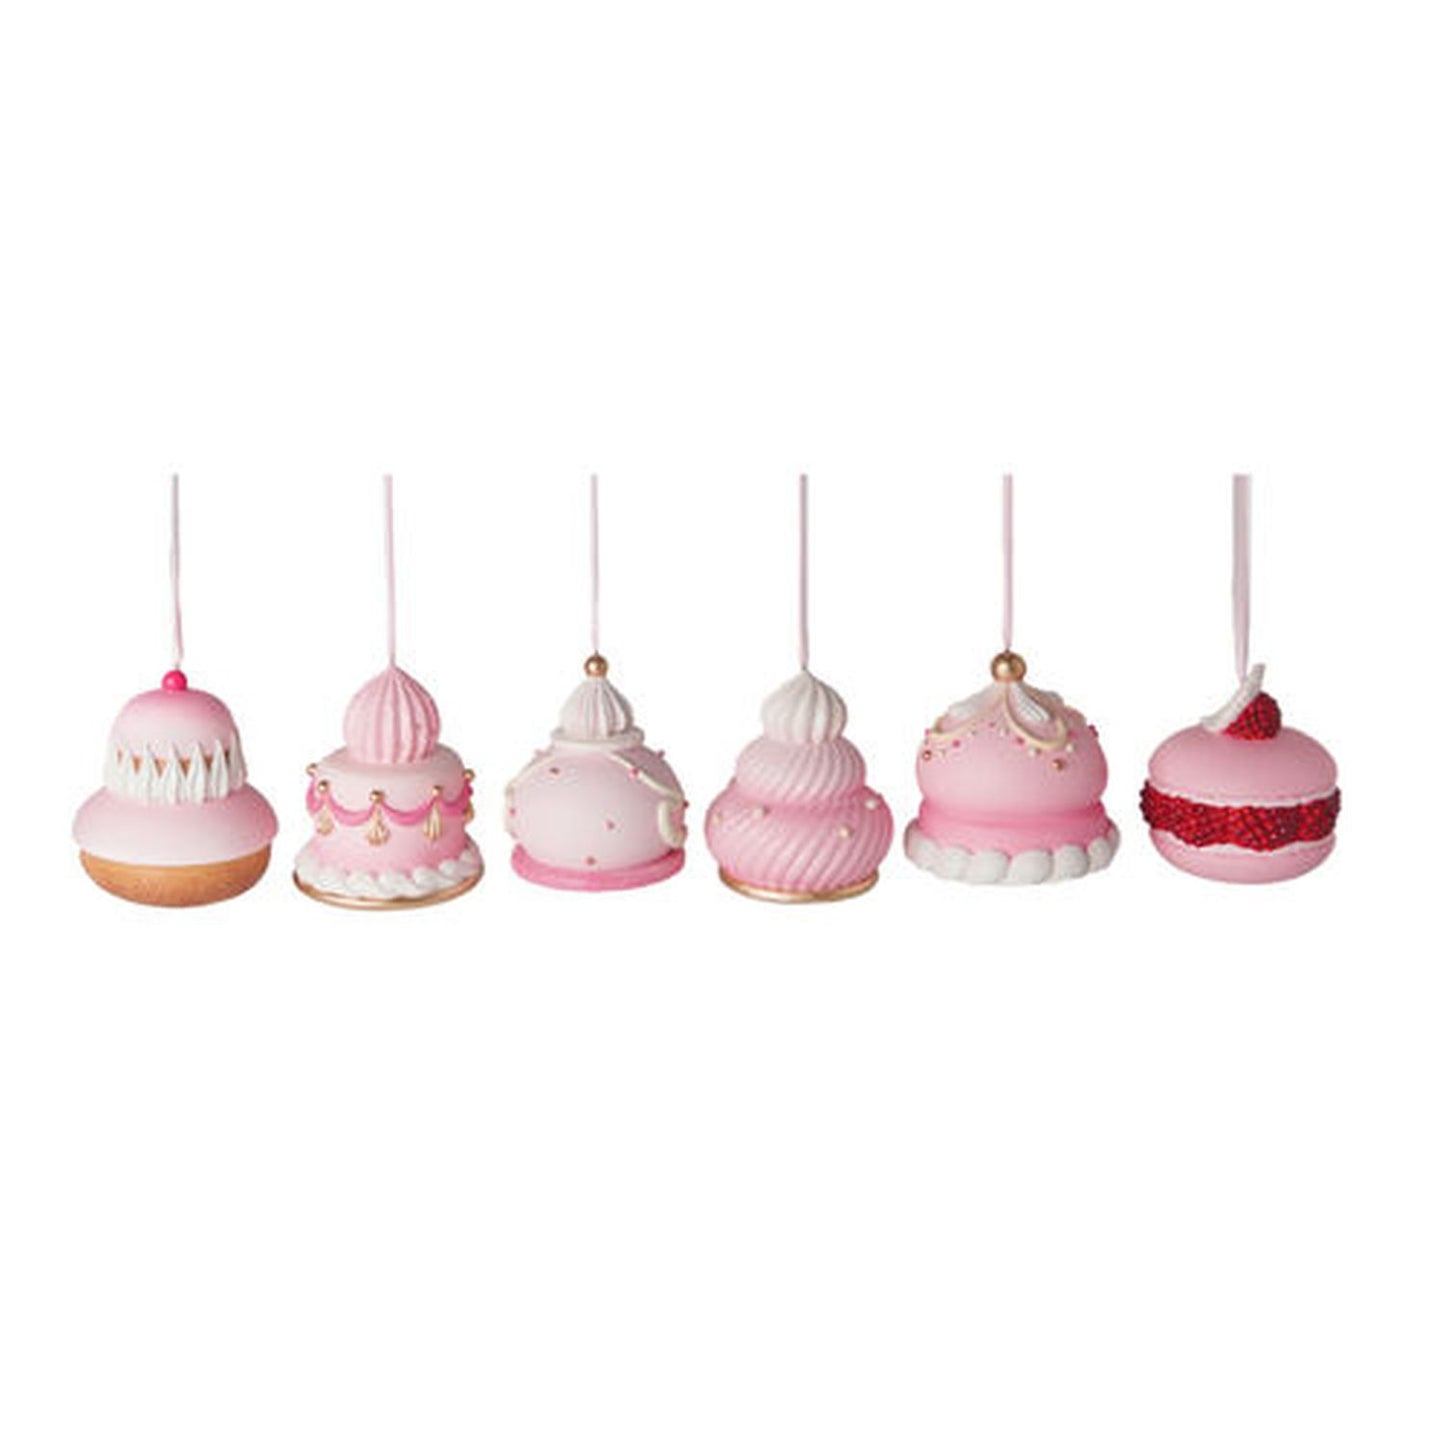 December Diamonds Nutcracker Sweet Shoppe Set Of 6 Assortment Pastry Ornaments